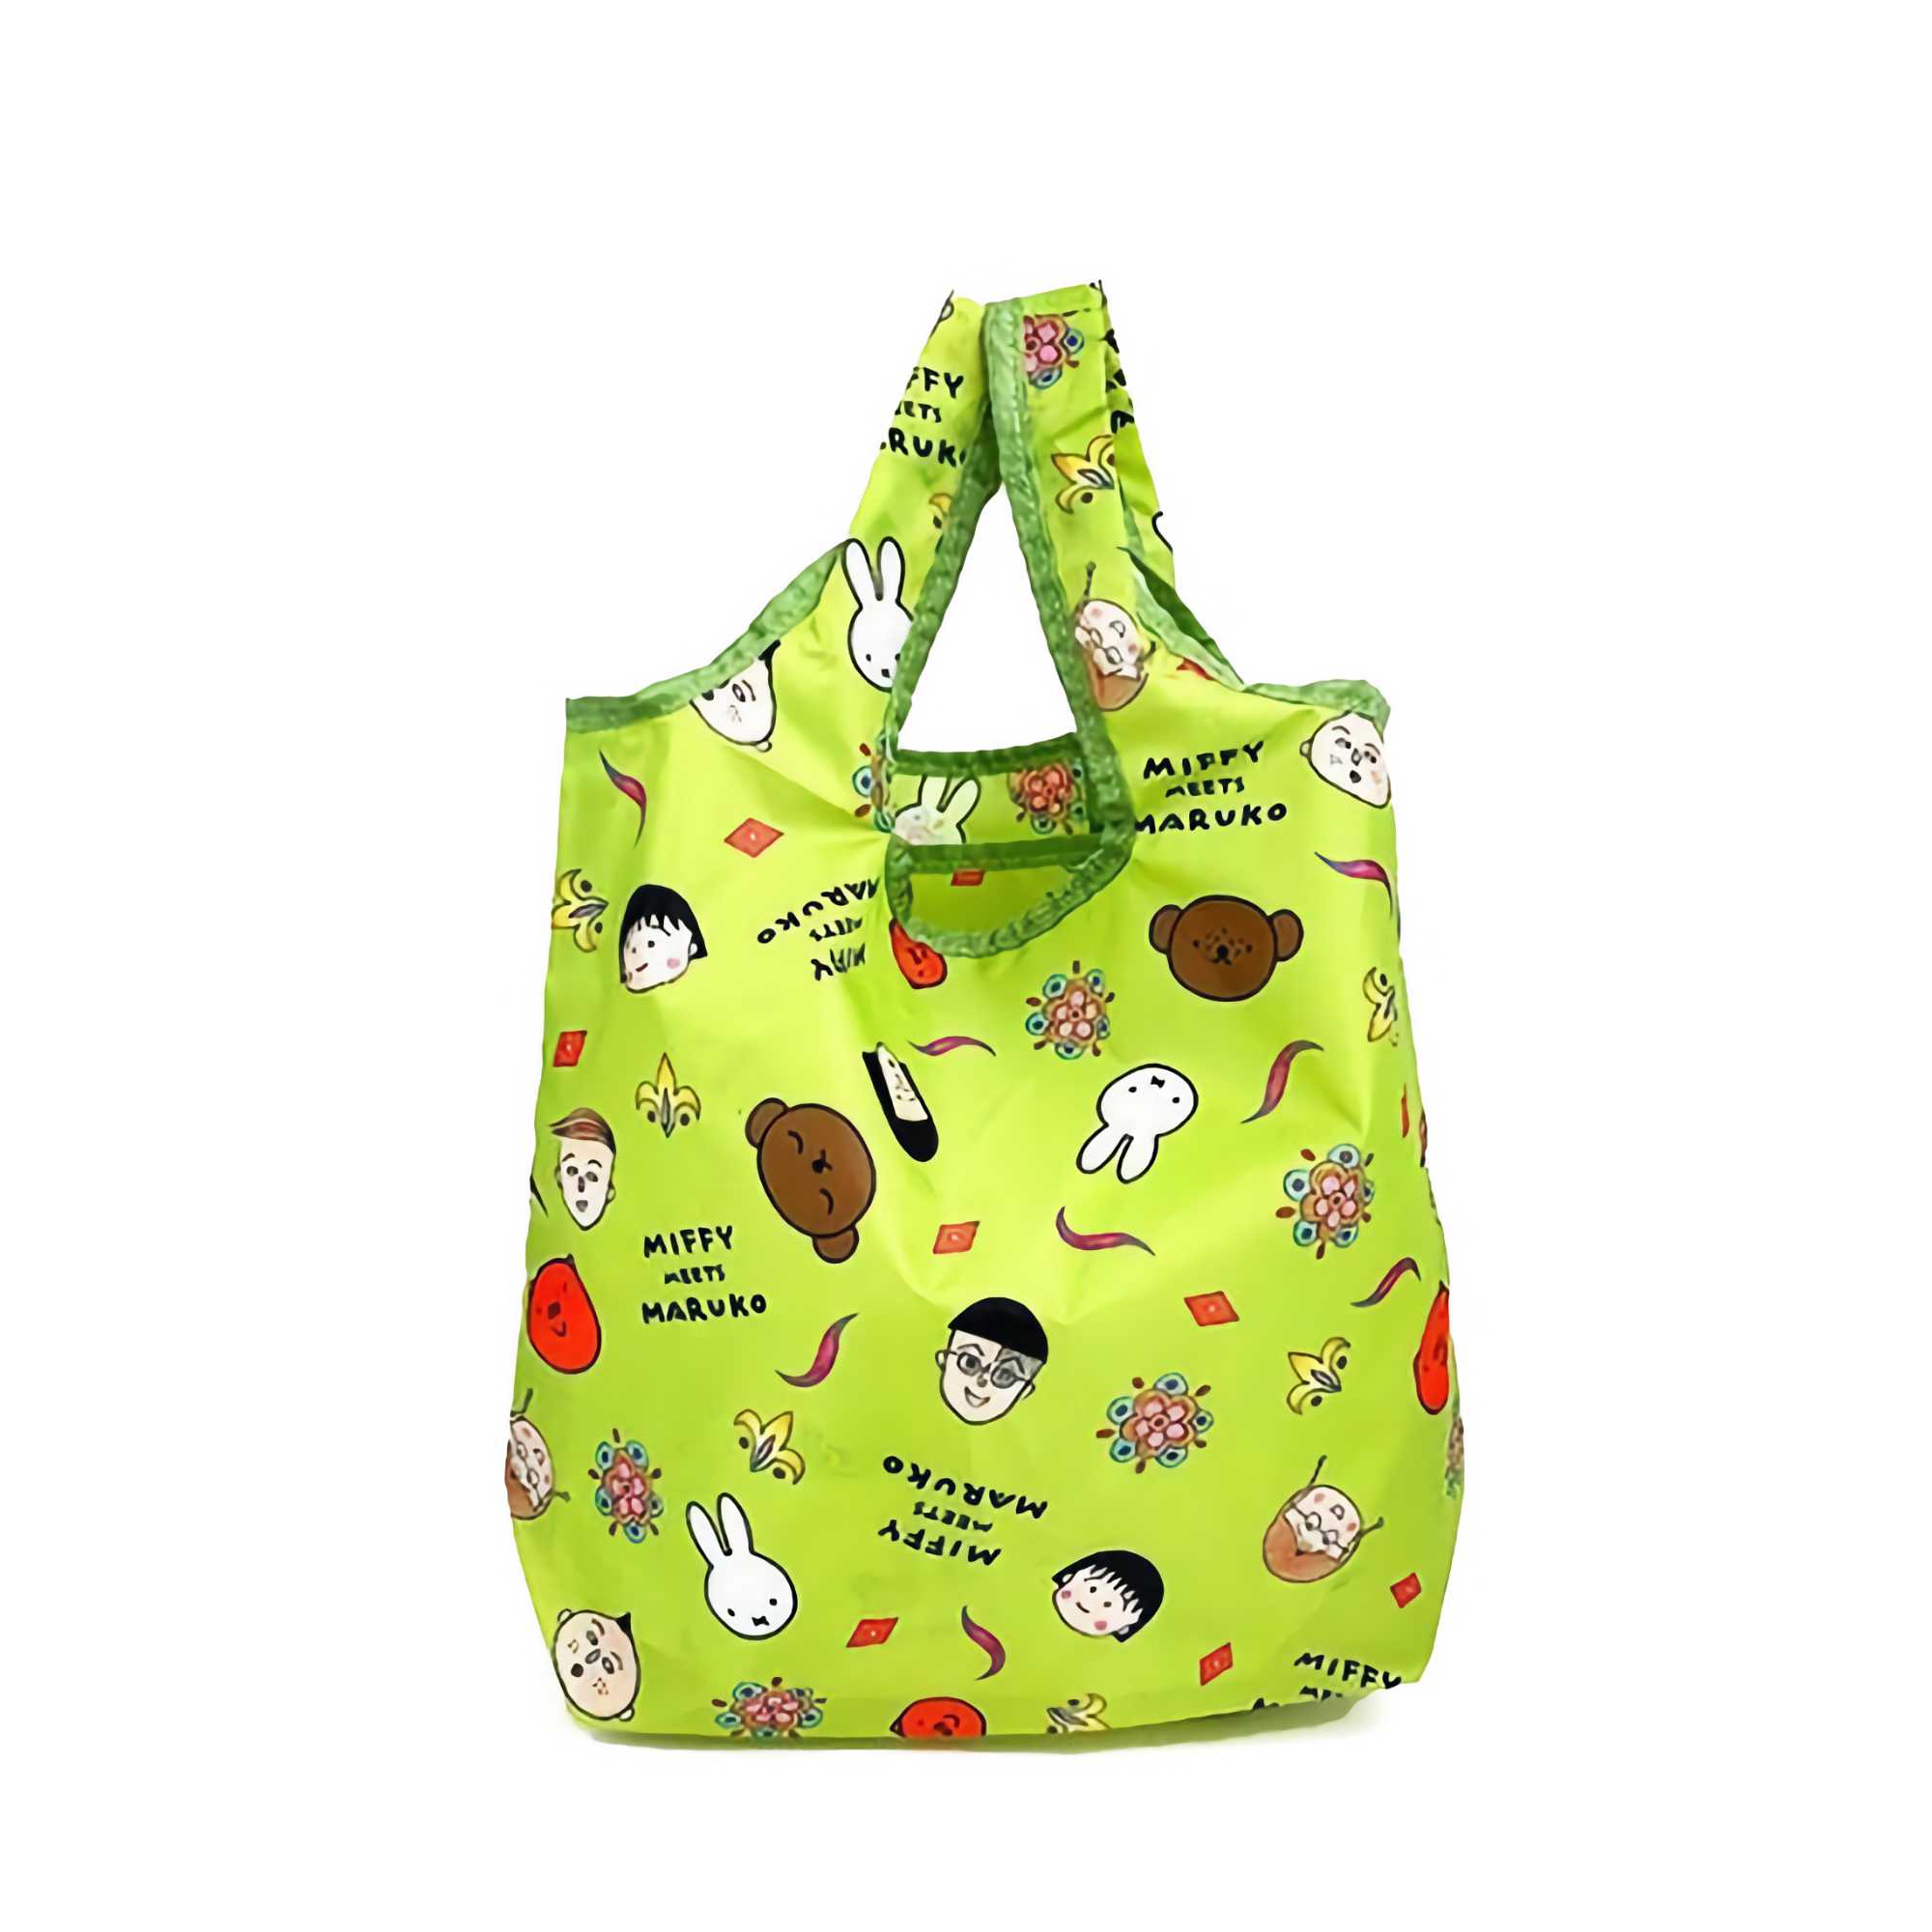 Miffy meets Maruko Eco Bag, Green